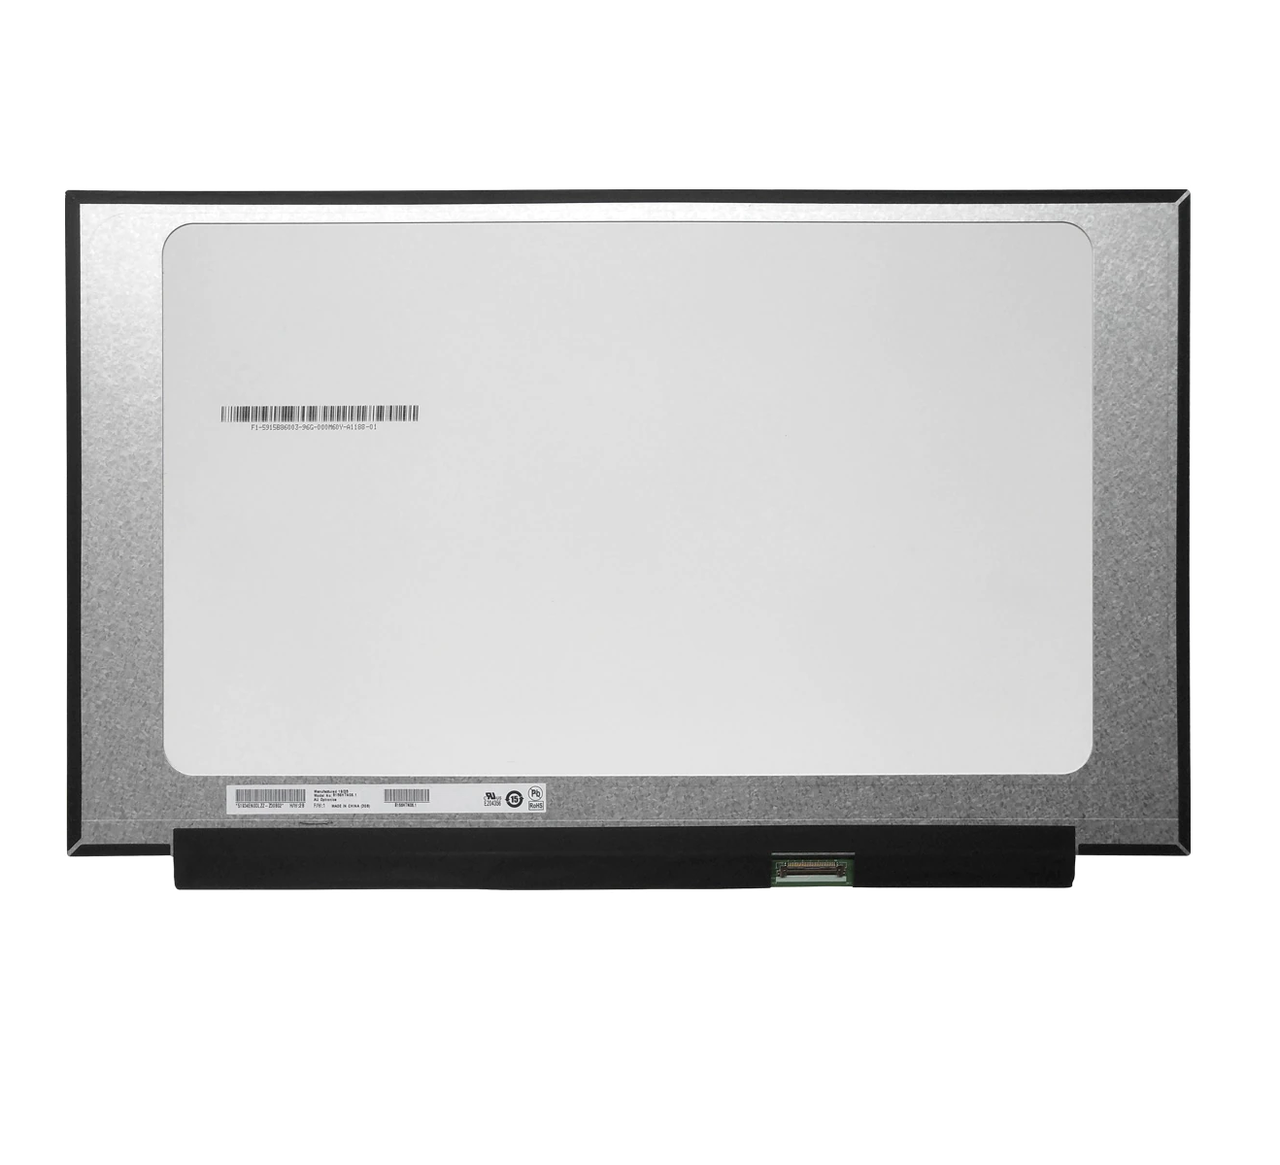 Матрица (экран) для ноутбука Sharp LQ156M1JW06, 15,6 40 eDp Slim, 1920x1080, IPS, 240Hz